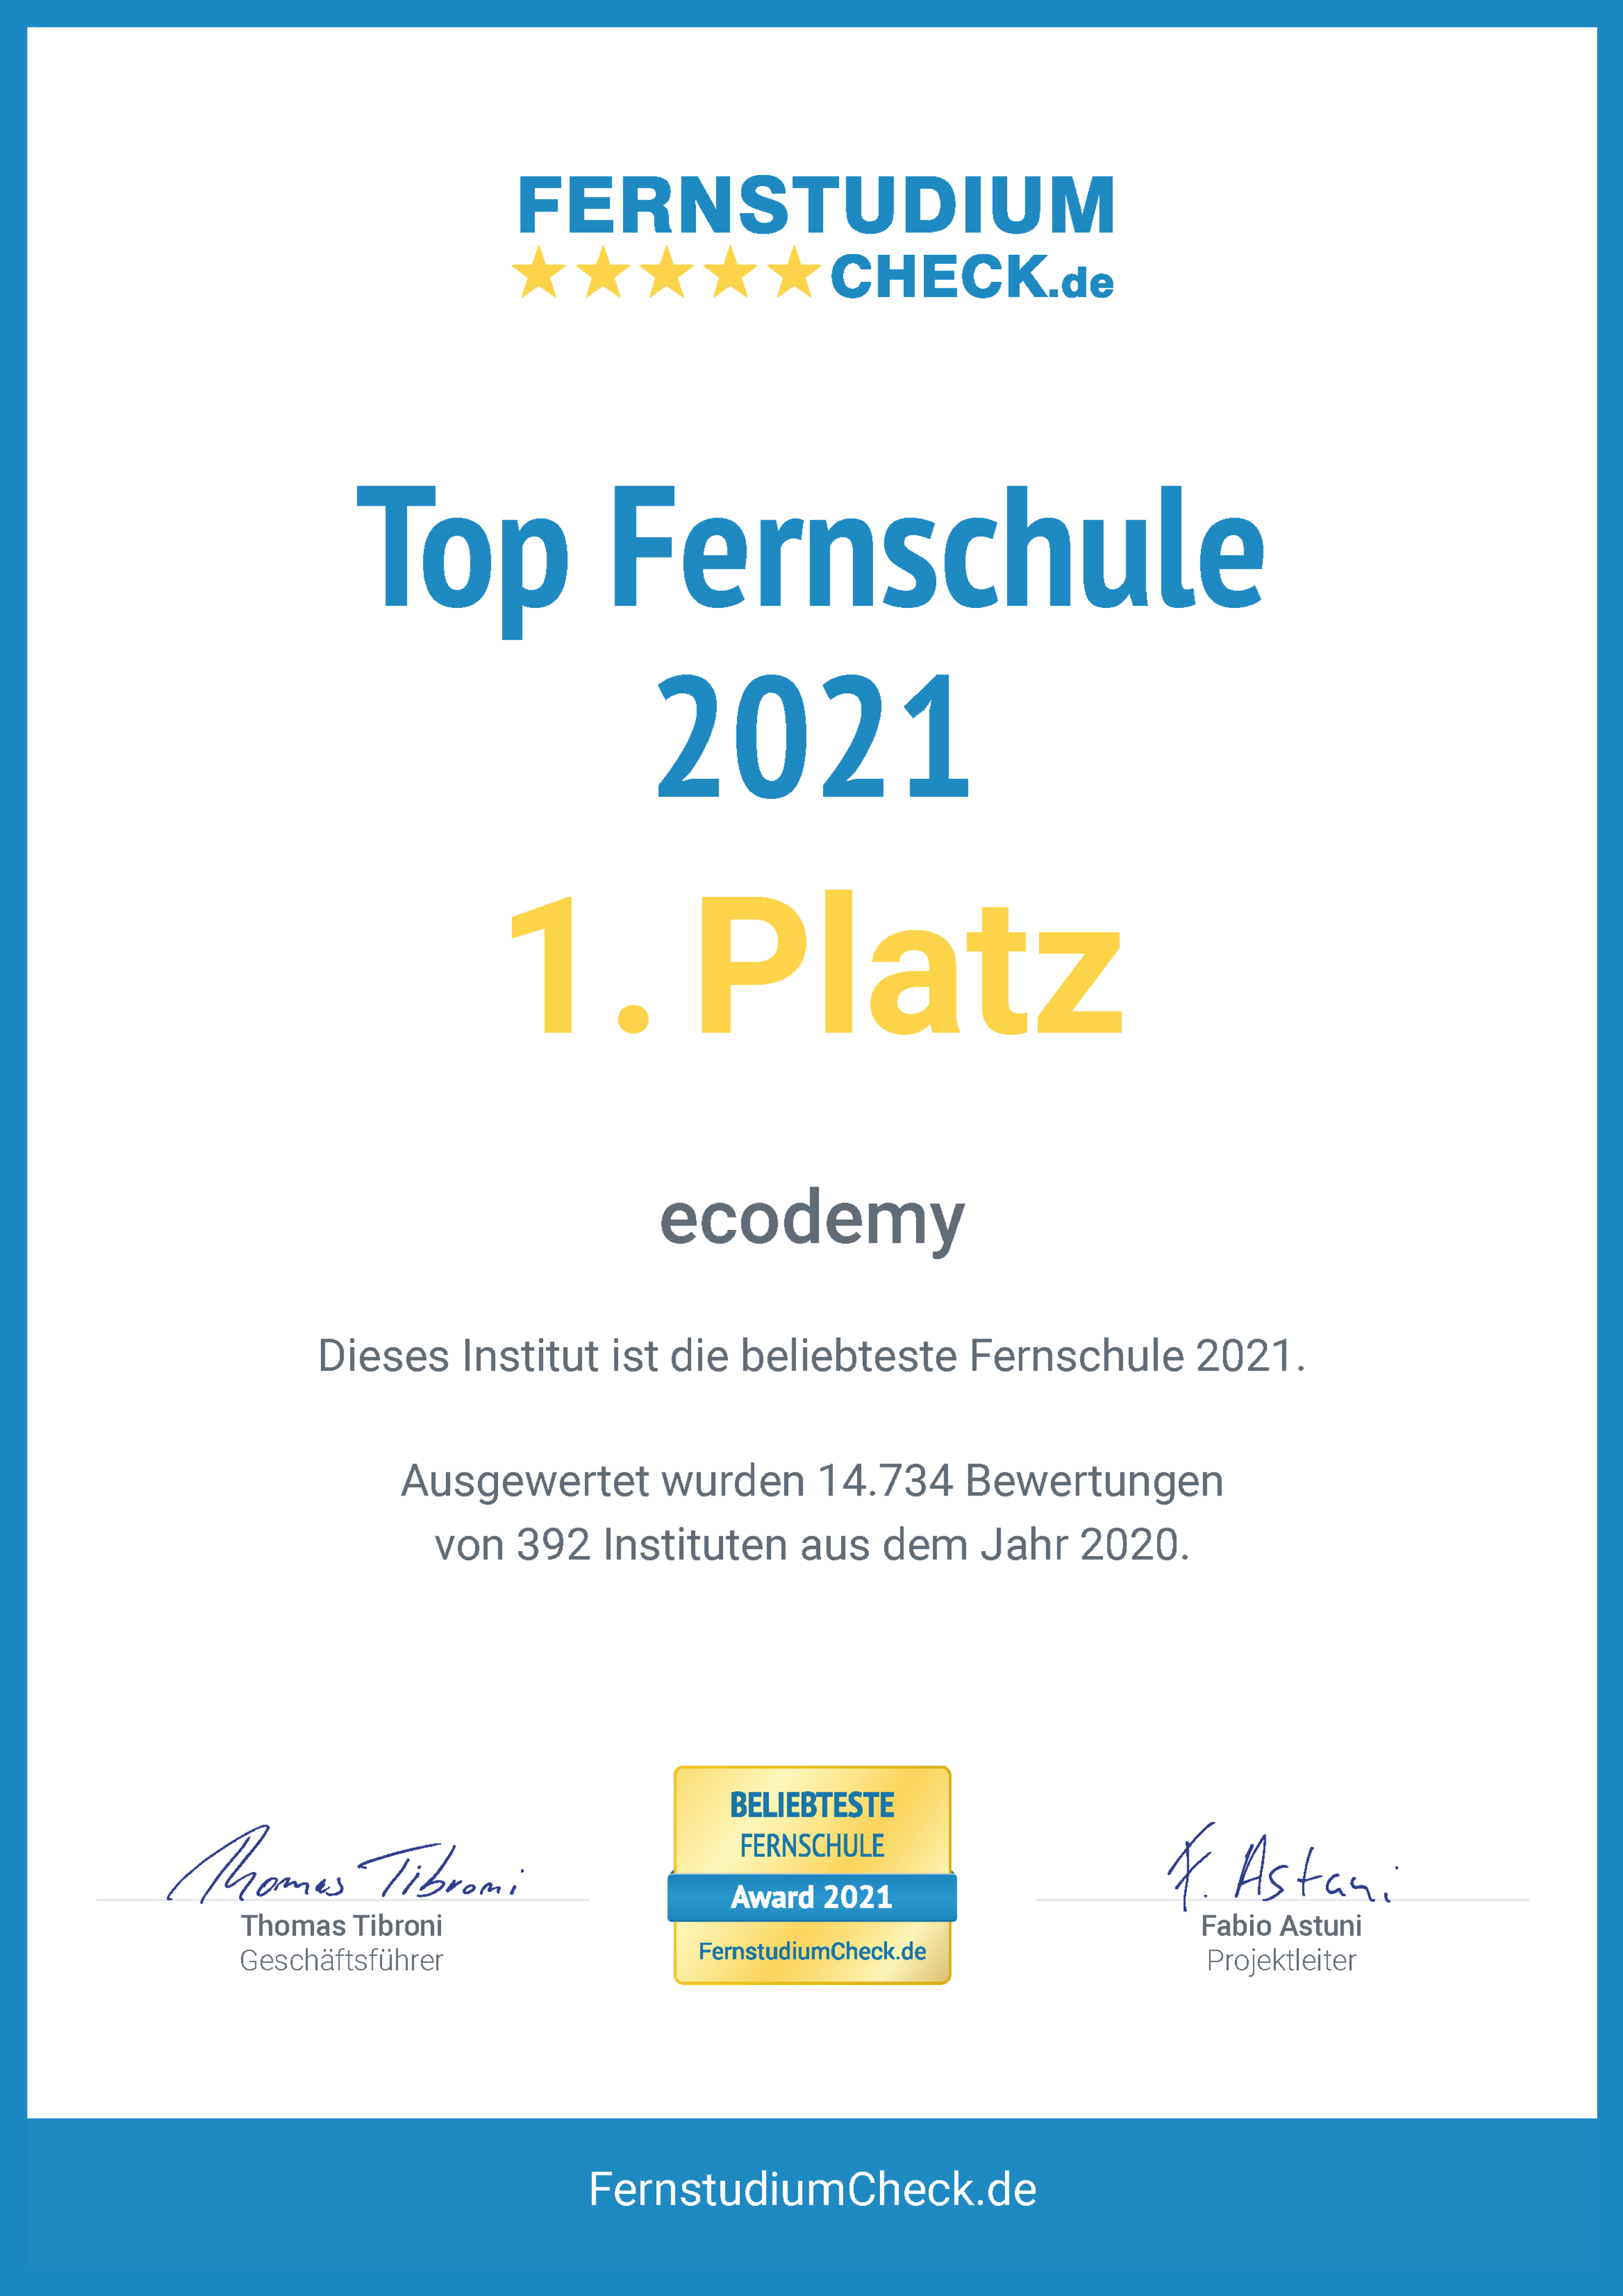 ecodemy beliebteste fernschule 2021 fernstudiumcheck.de